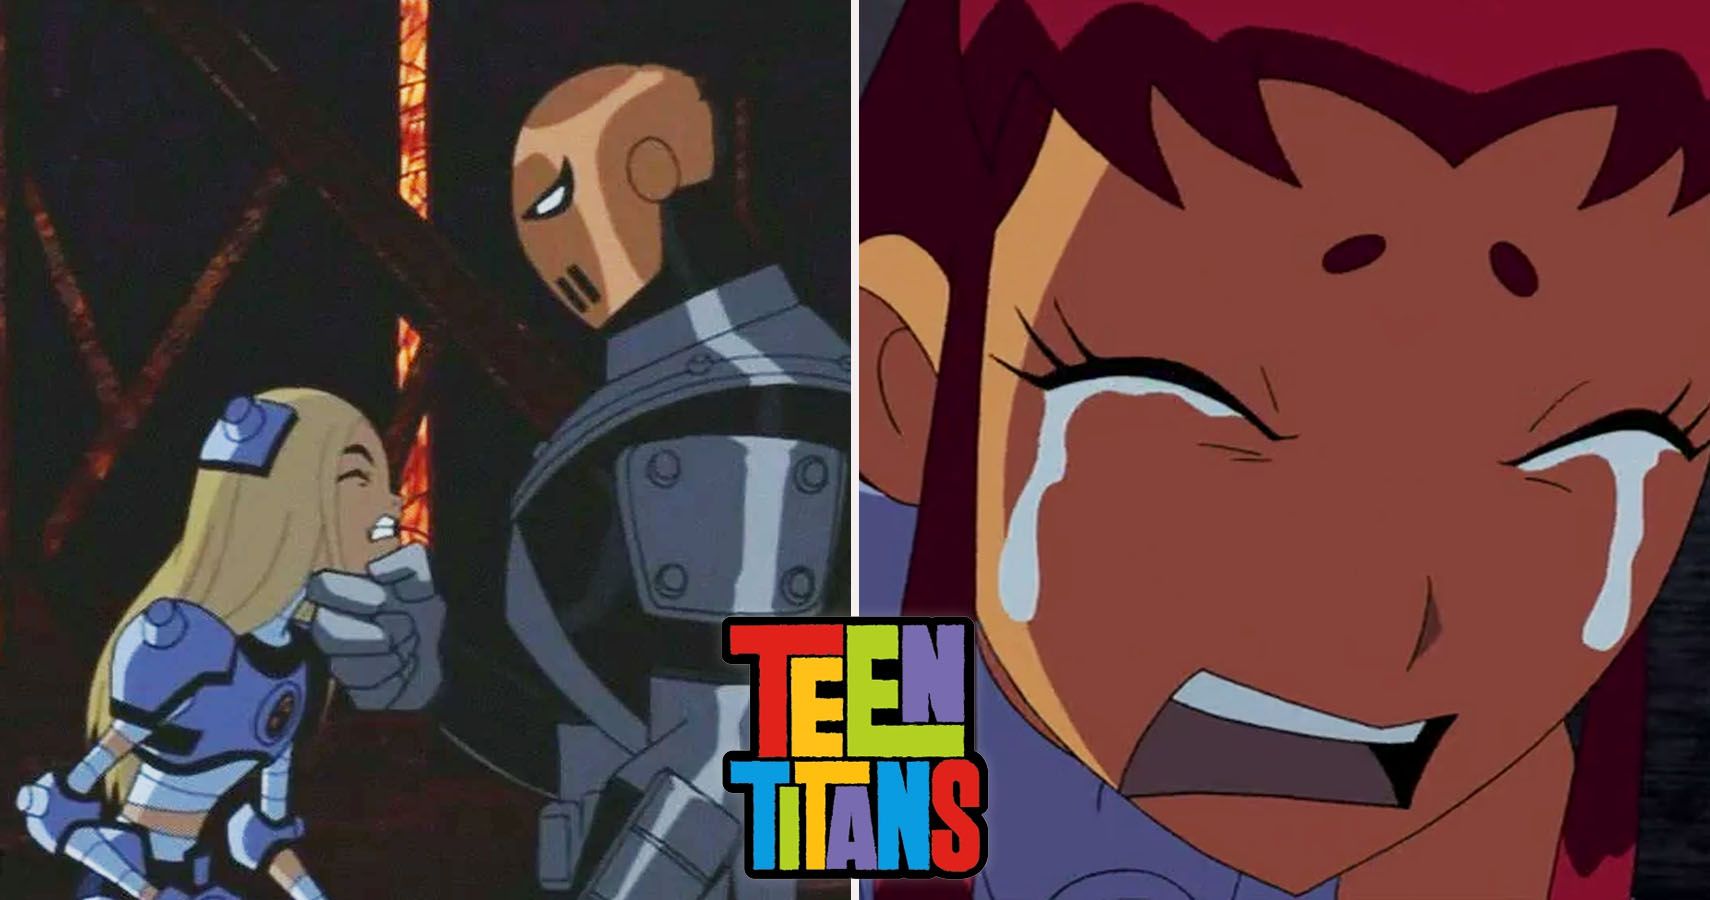 The Red X  Teen titans, Teen titans show, Teen titans fanart